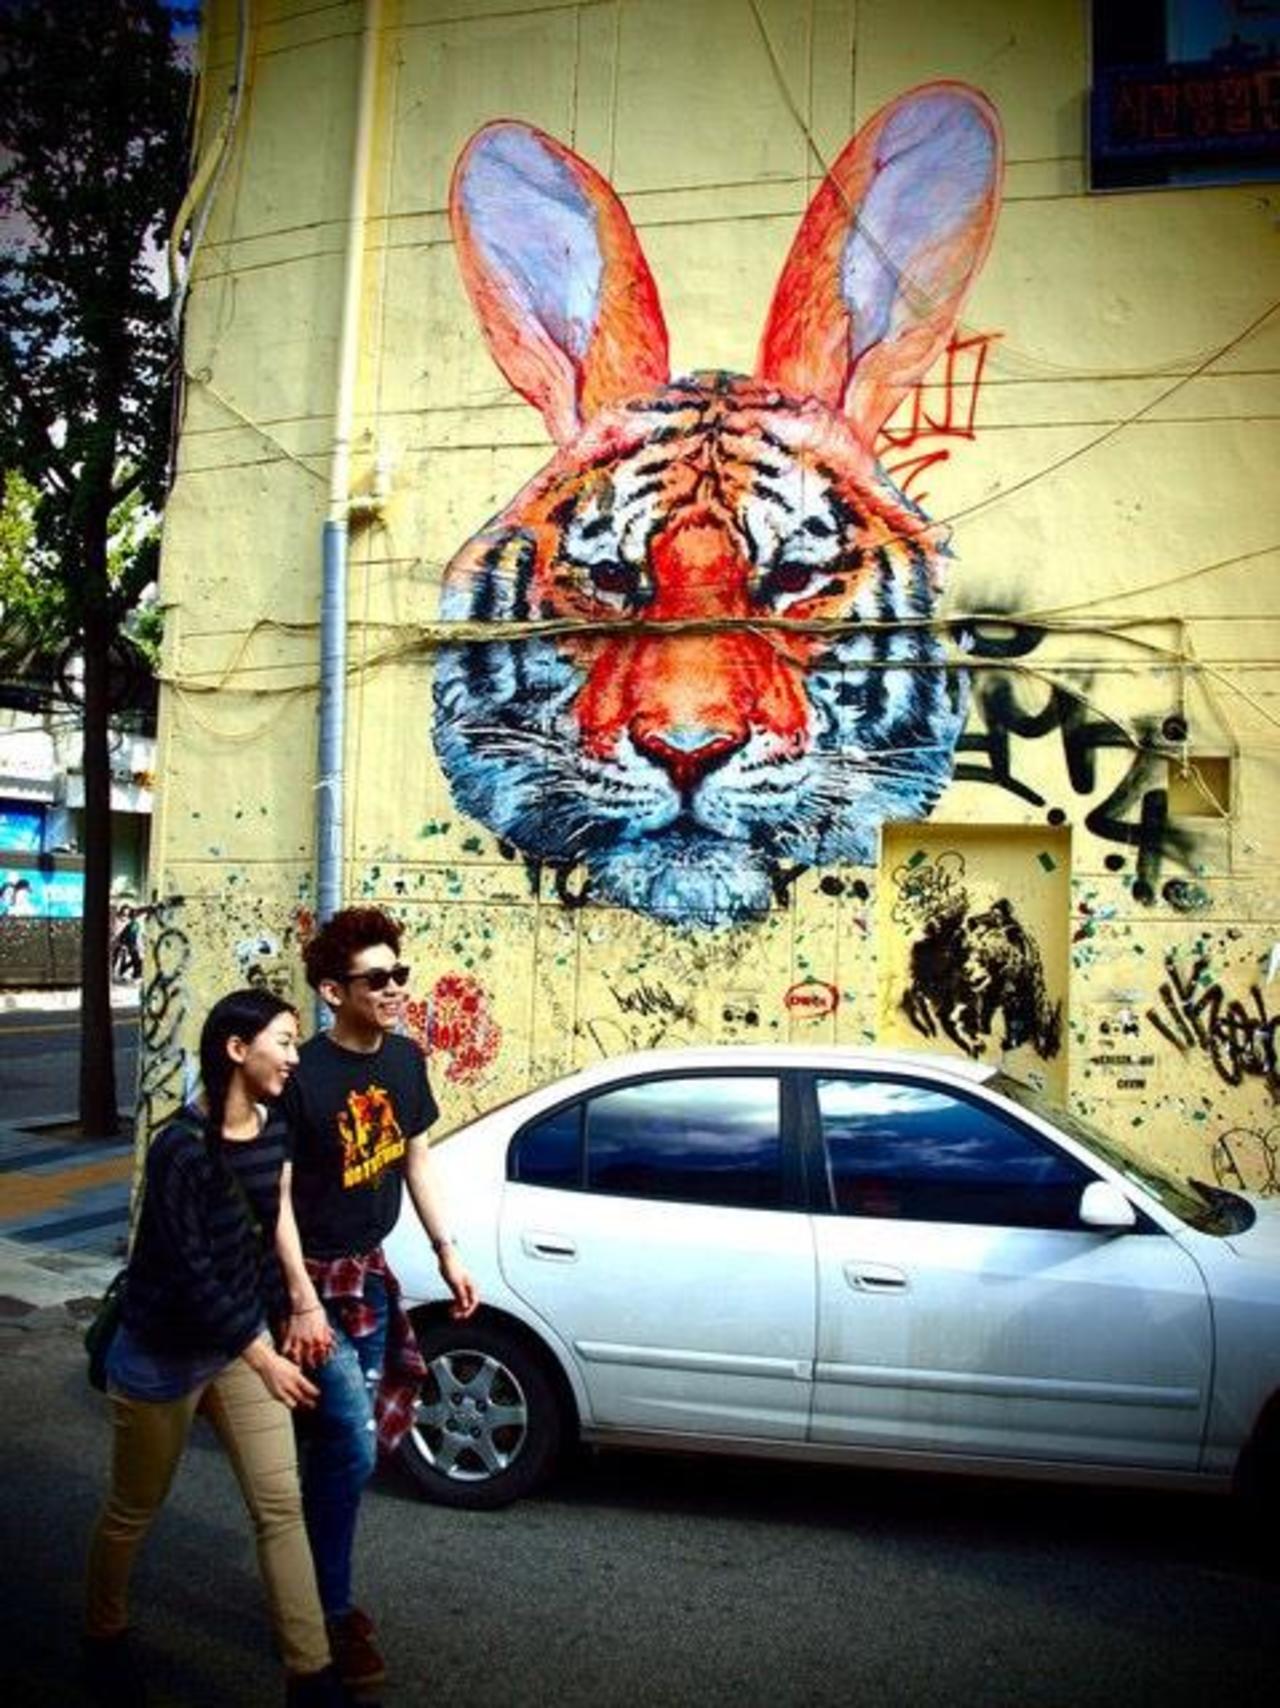 Gaia / "Walk on the Wild Side”
Seoul, South Korea

#streetart #art #graffiti http://t.co/om7XhvIVjK